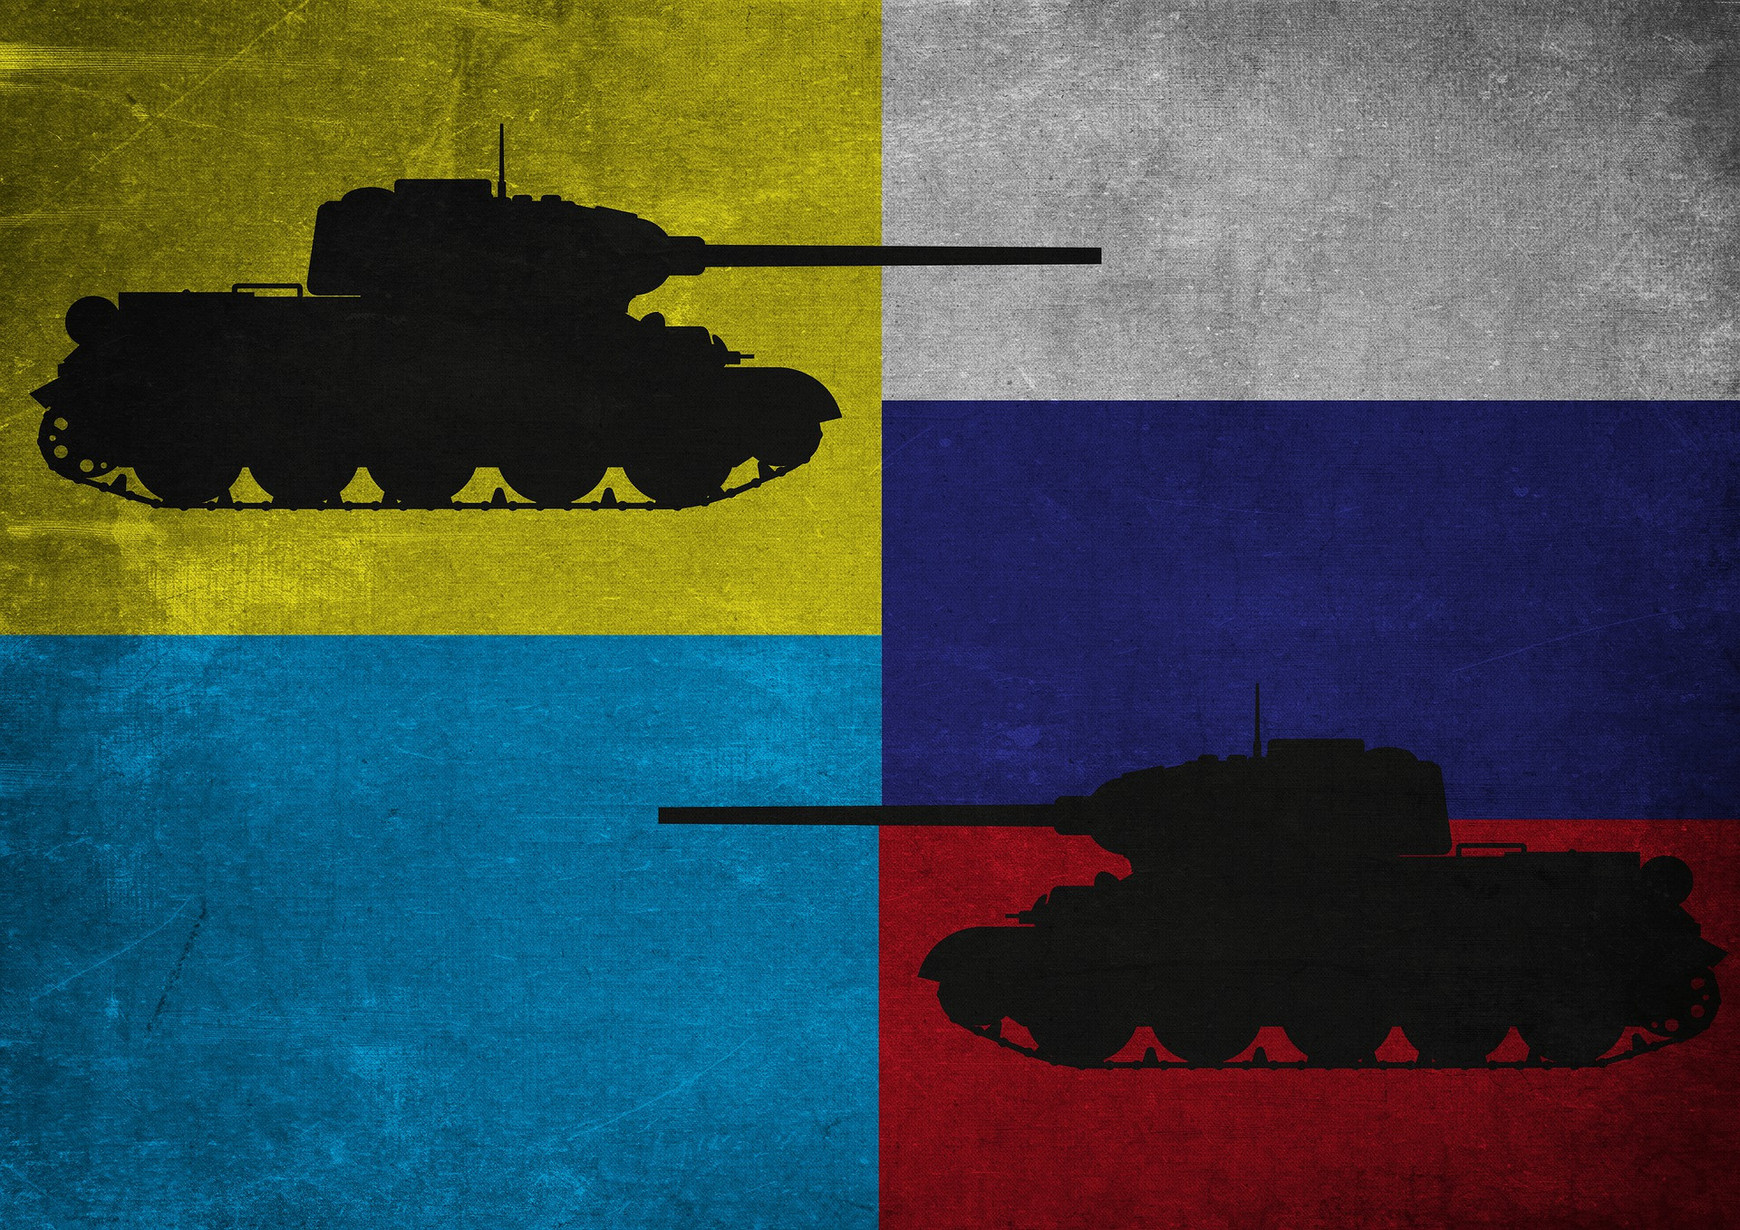 Guerre en Ukraine : la propagande est une arme - la chronique de Quentin Dickinson